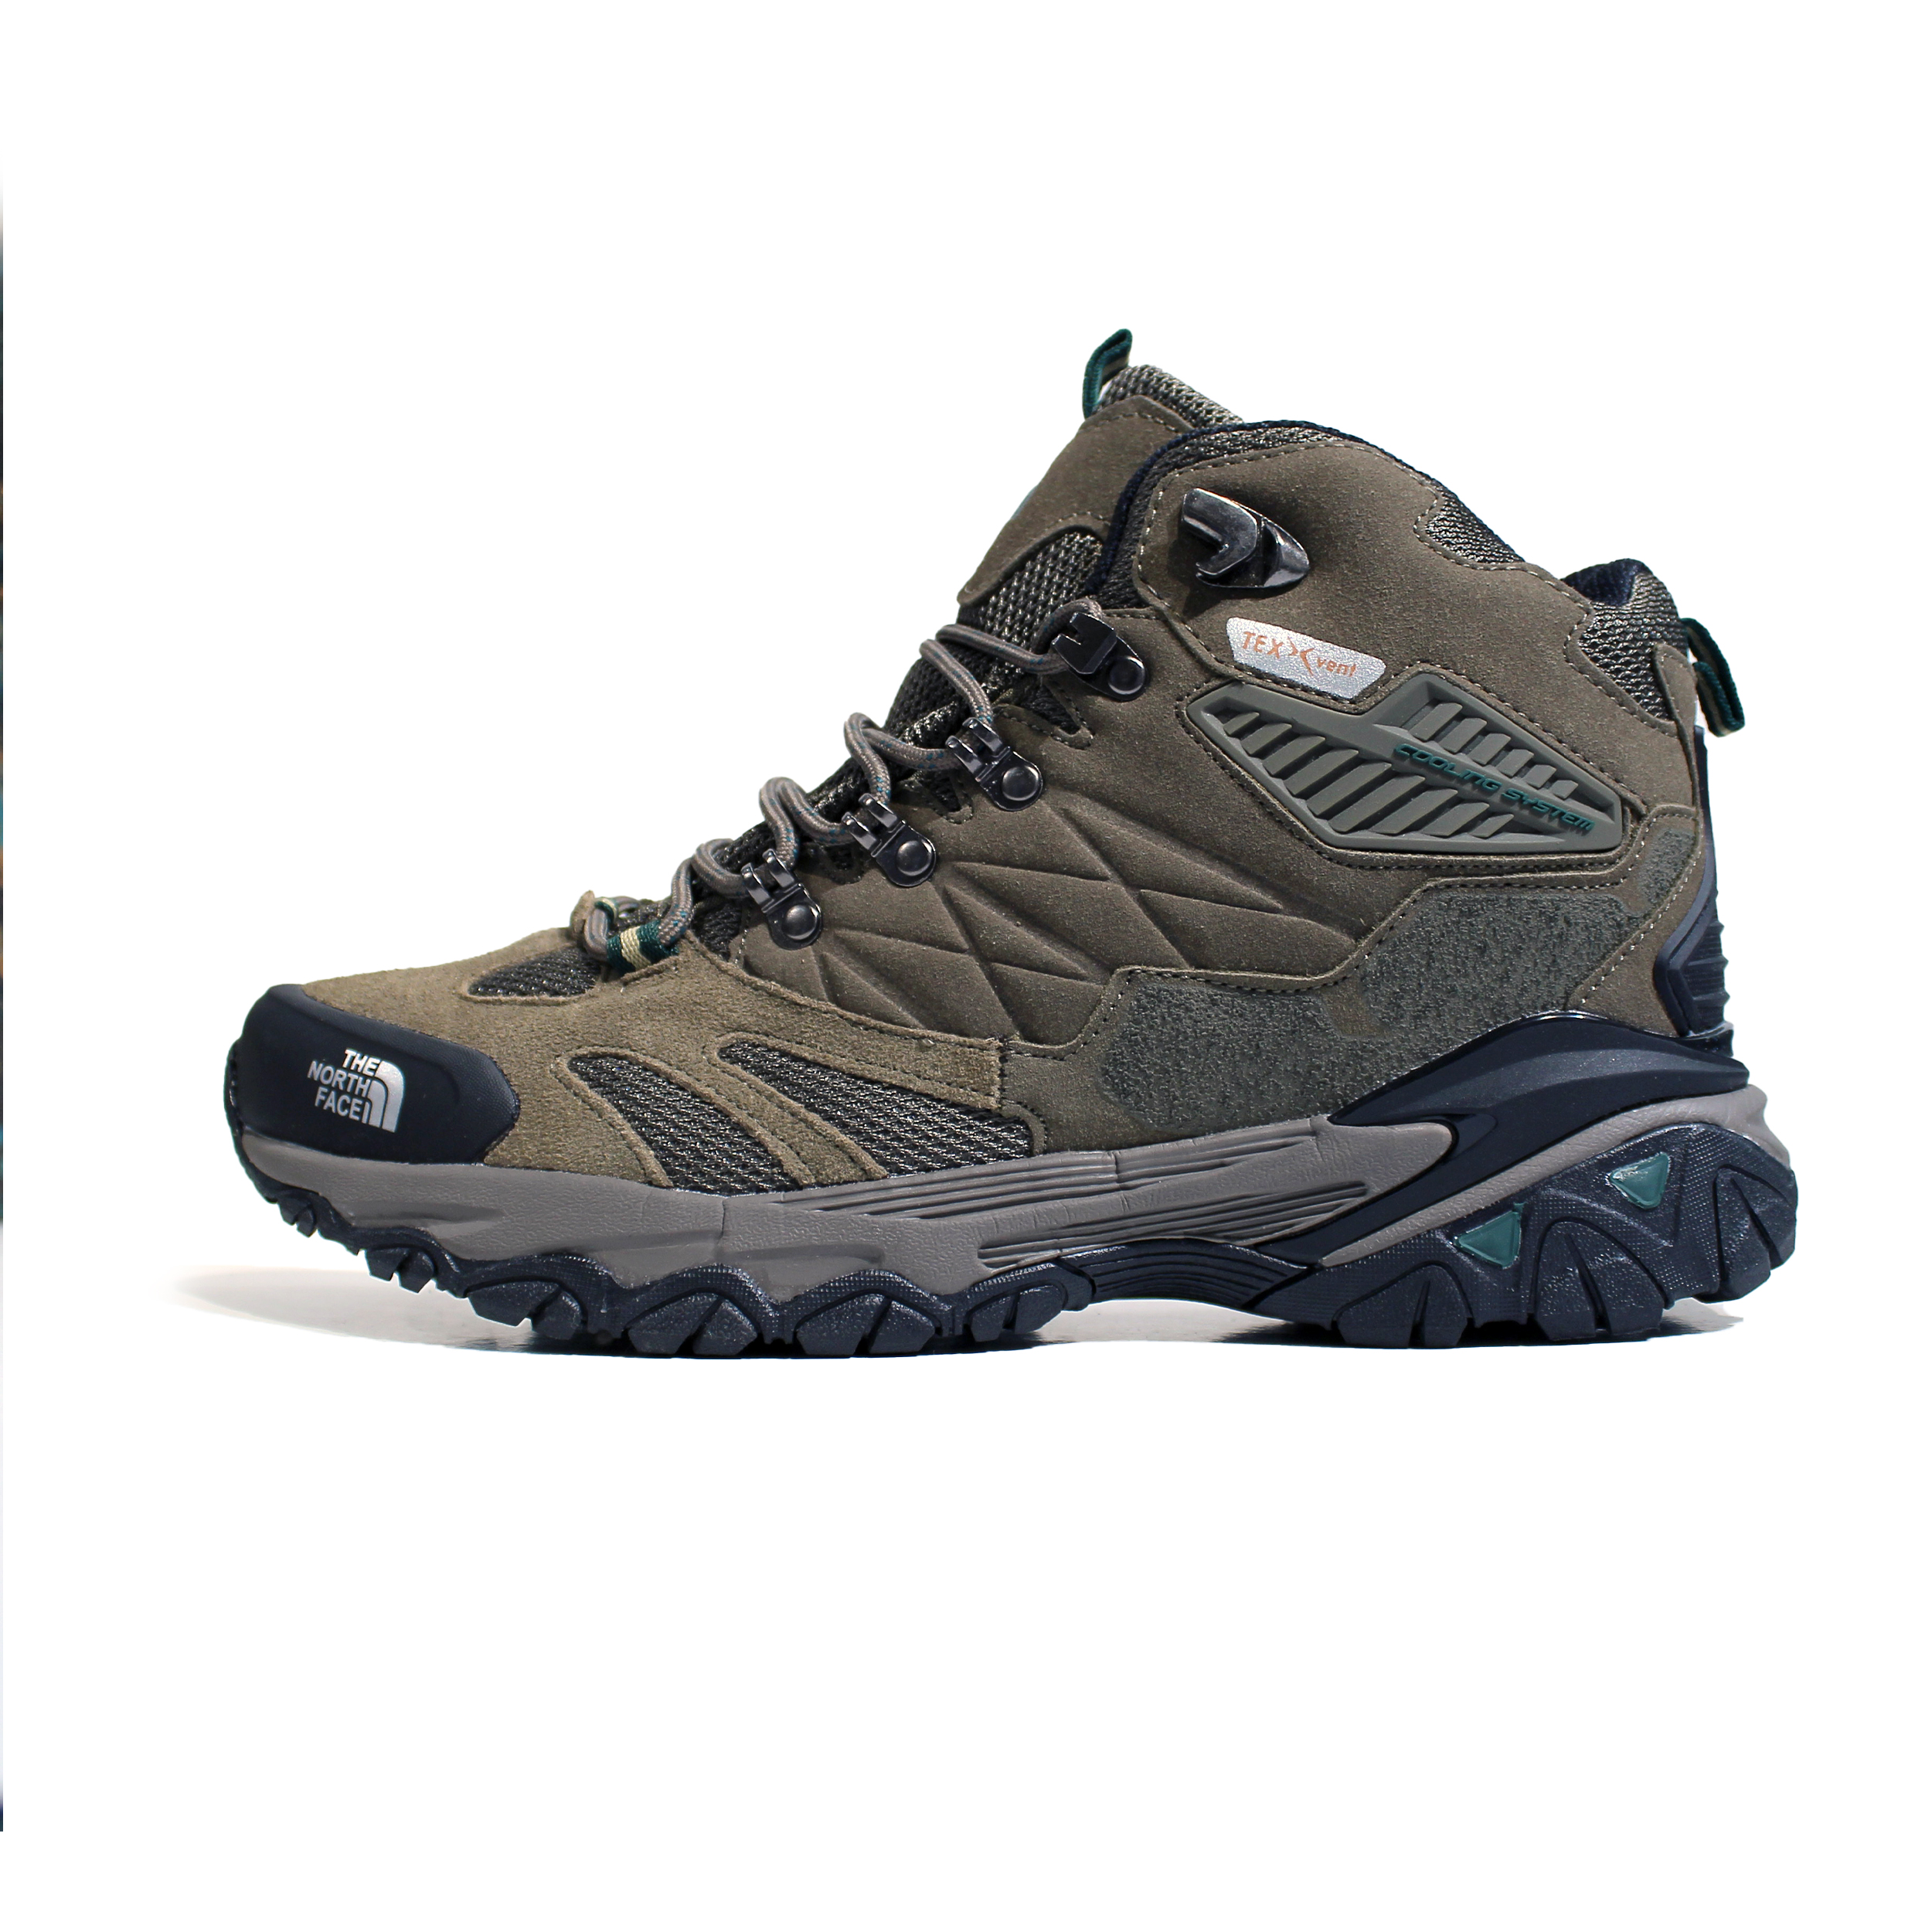 نکته خرید - قیمت روز کفش کوهنوردی نورث فیس مدل TEX vent COOLING SYSTEM BRW-129004011 خرید